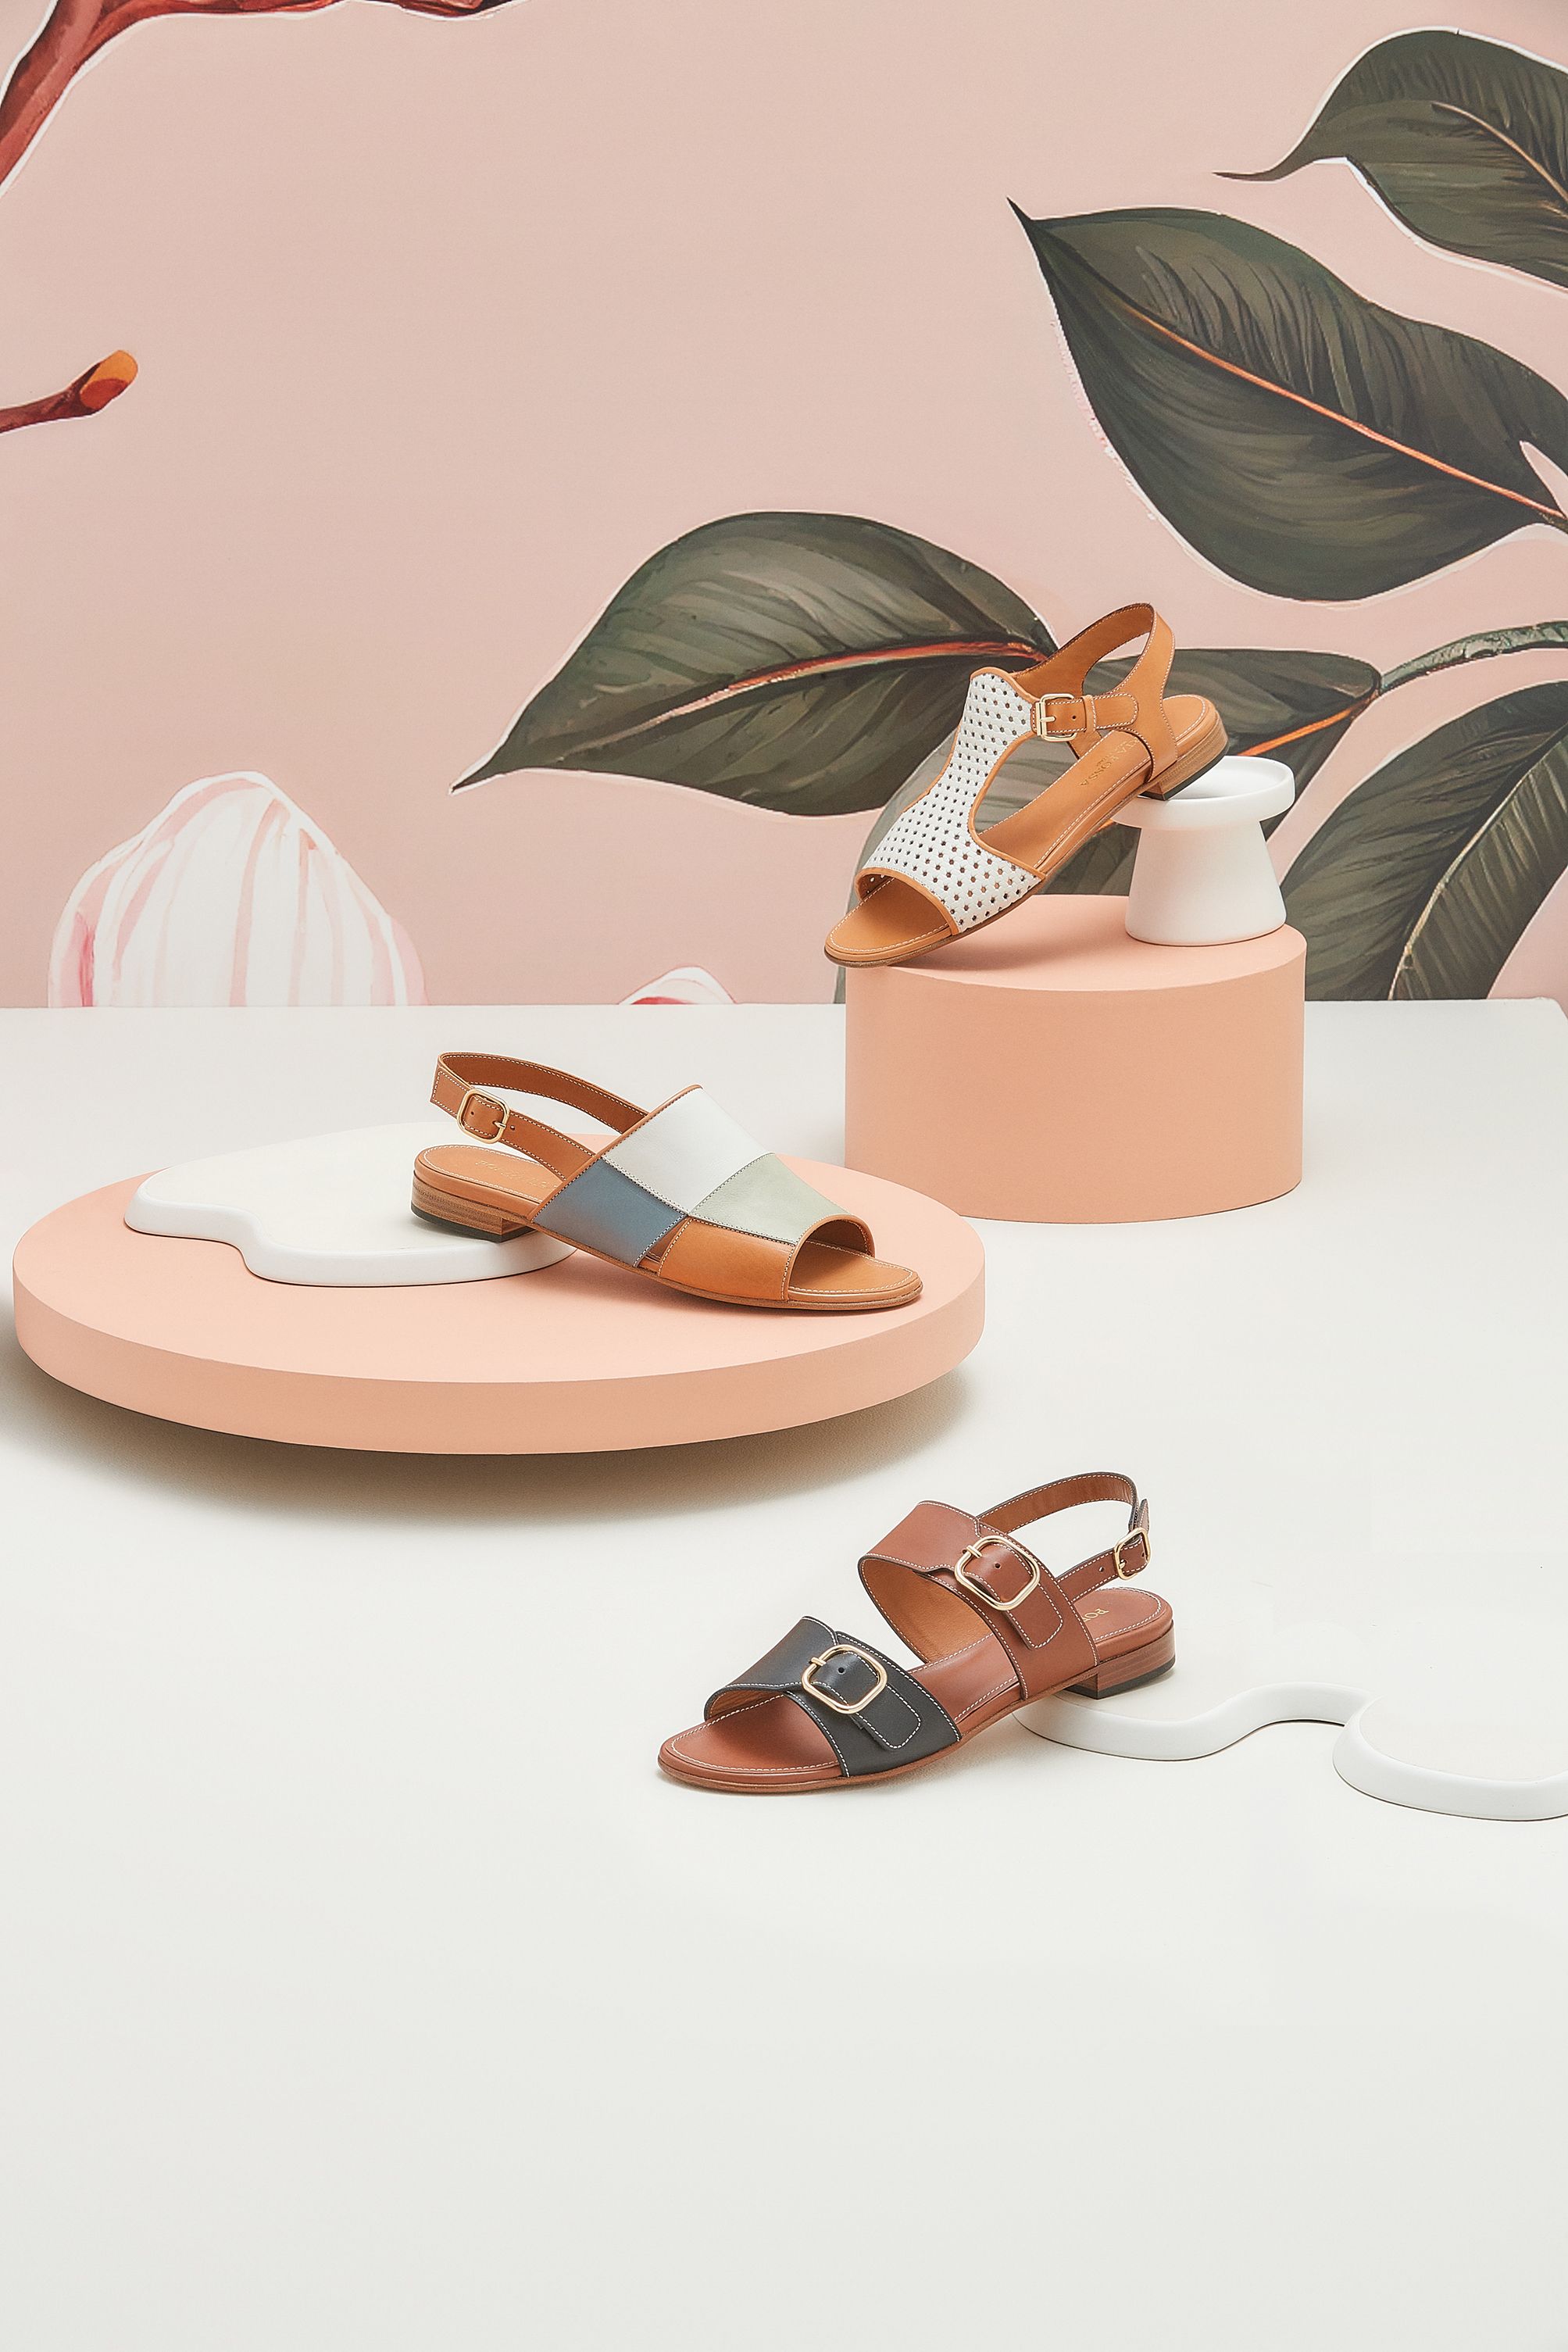 Sandals | Buy Women's Sandals Online Australia |- THE ICONIC